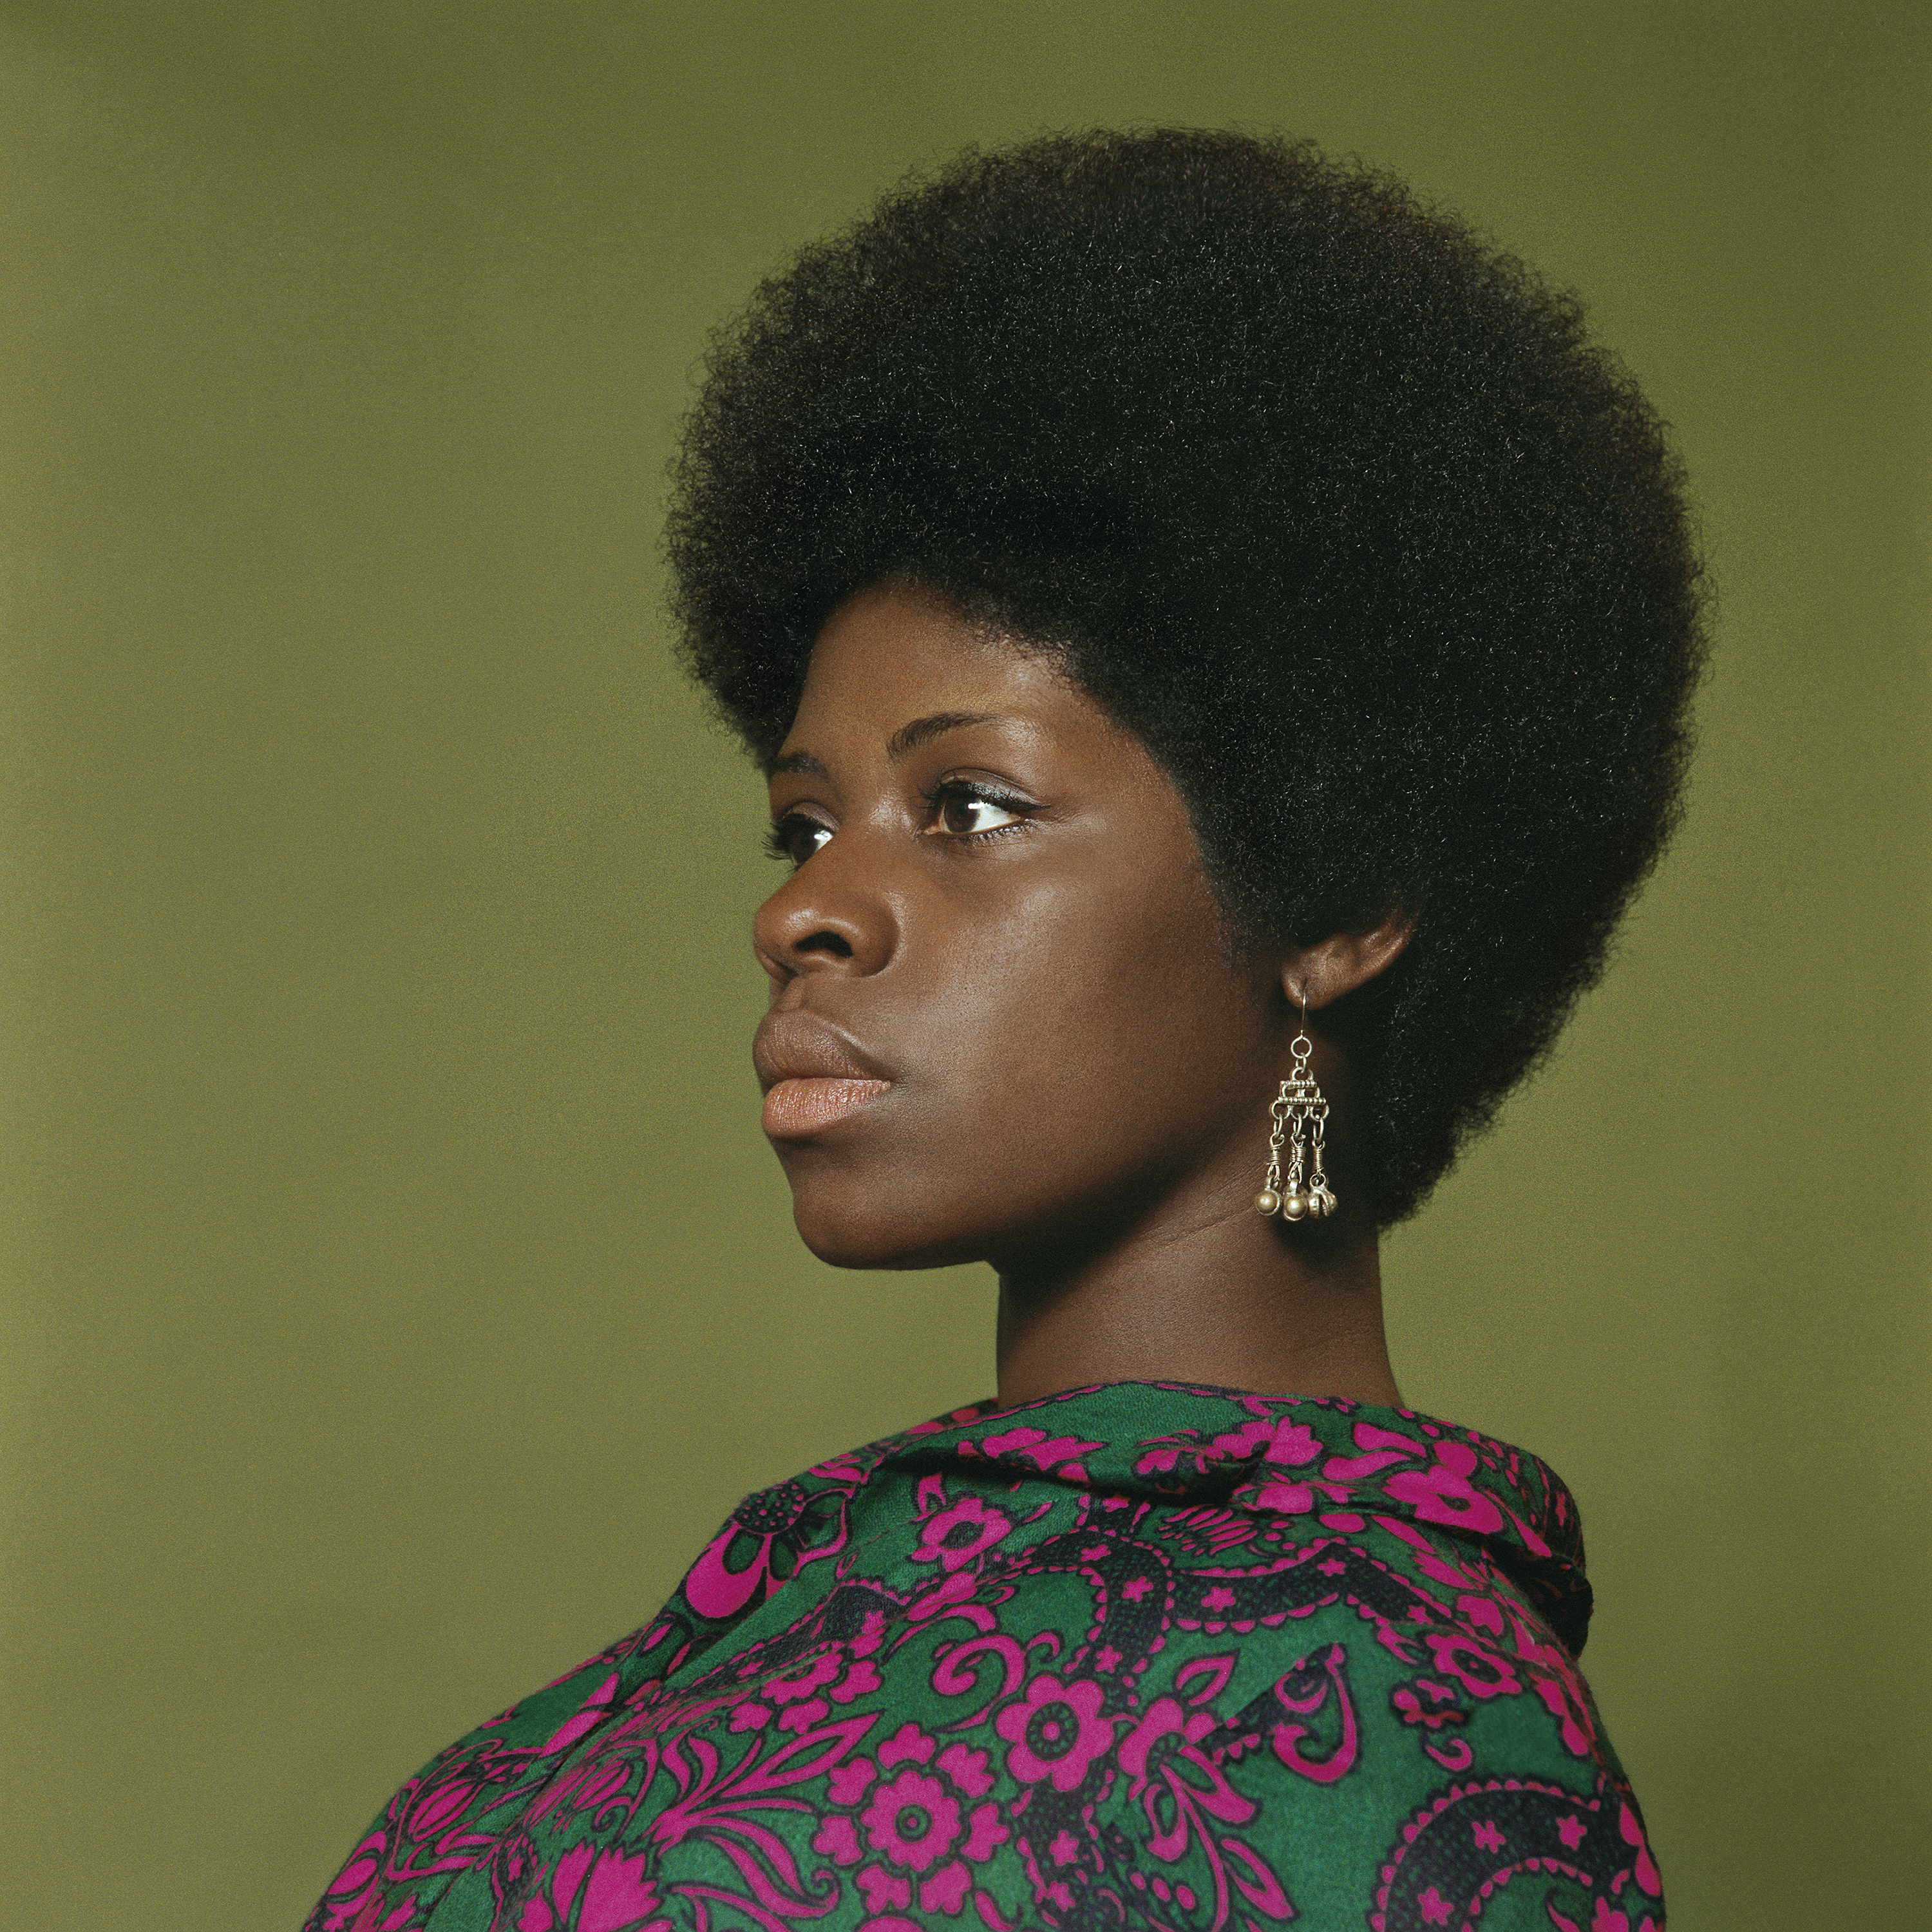 Kwame Brathwaite S Photos Of The Black Is Beautiful Movement